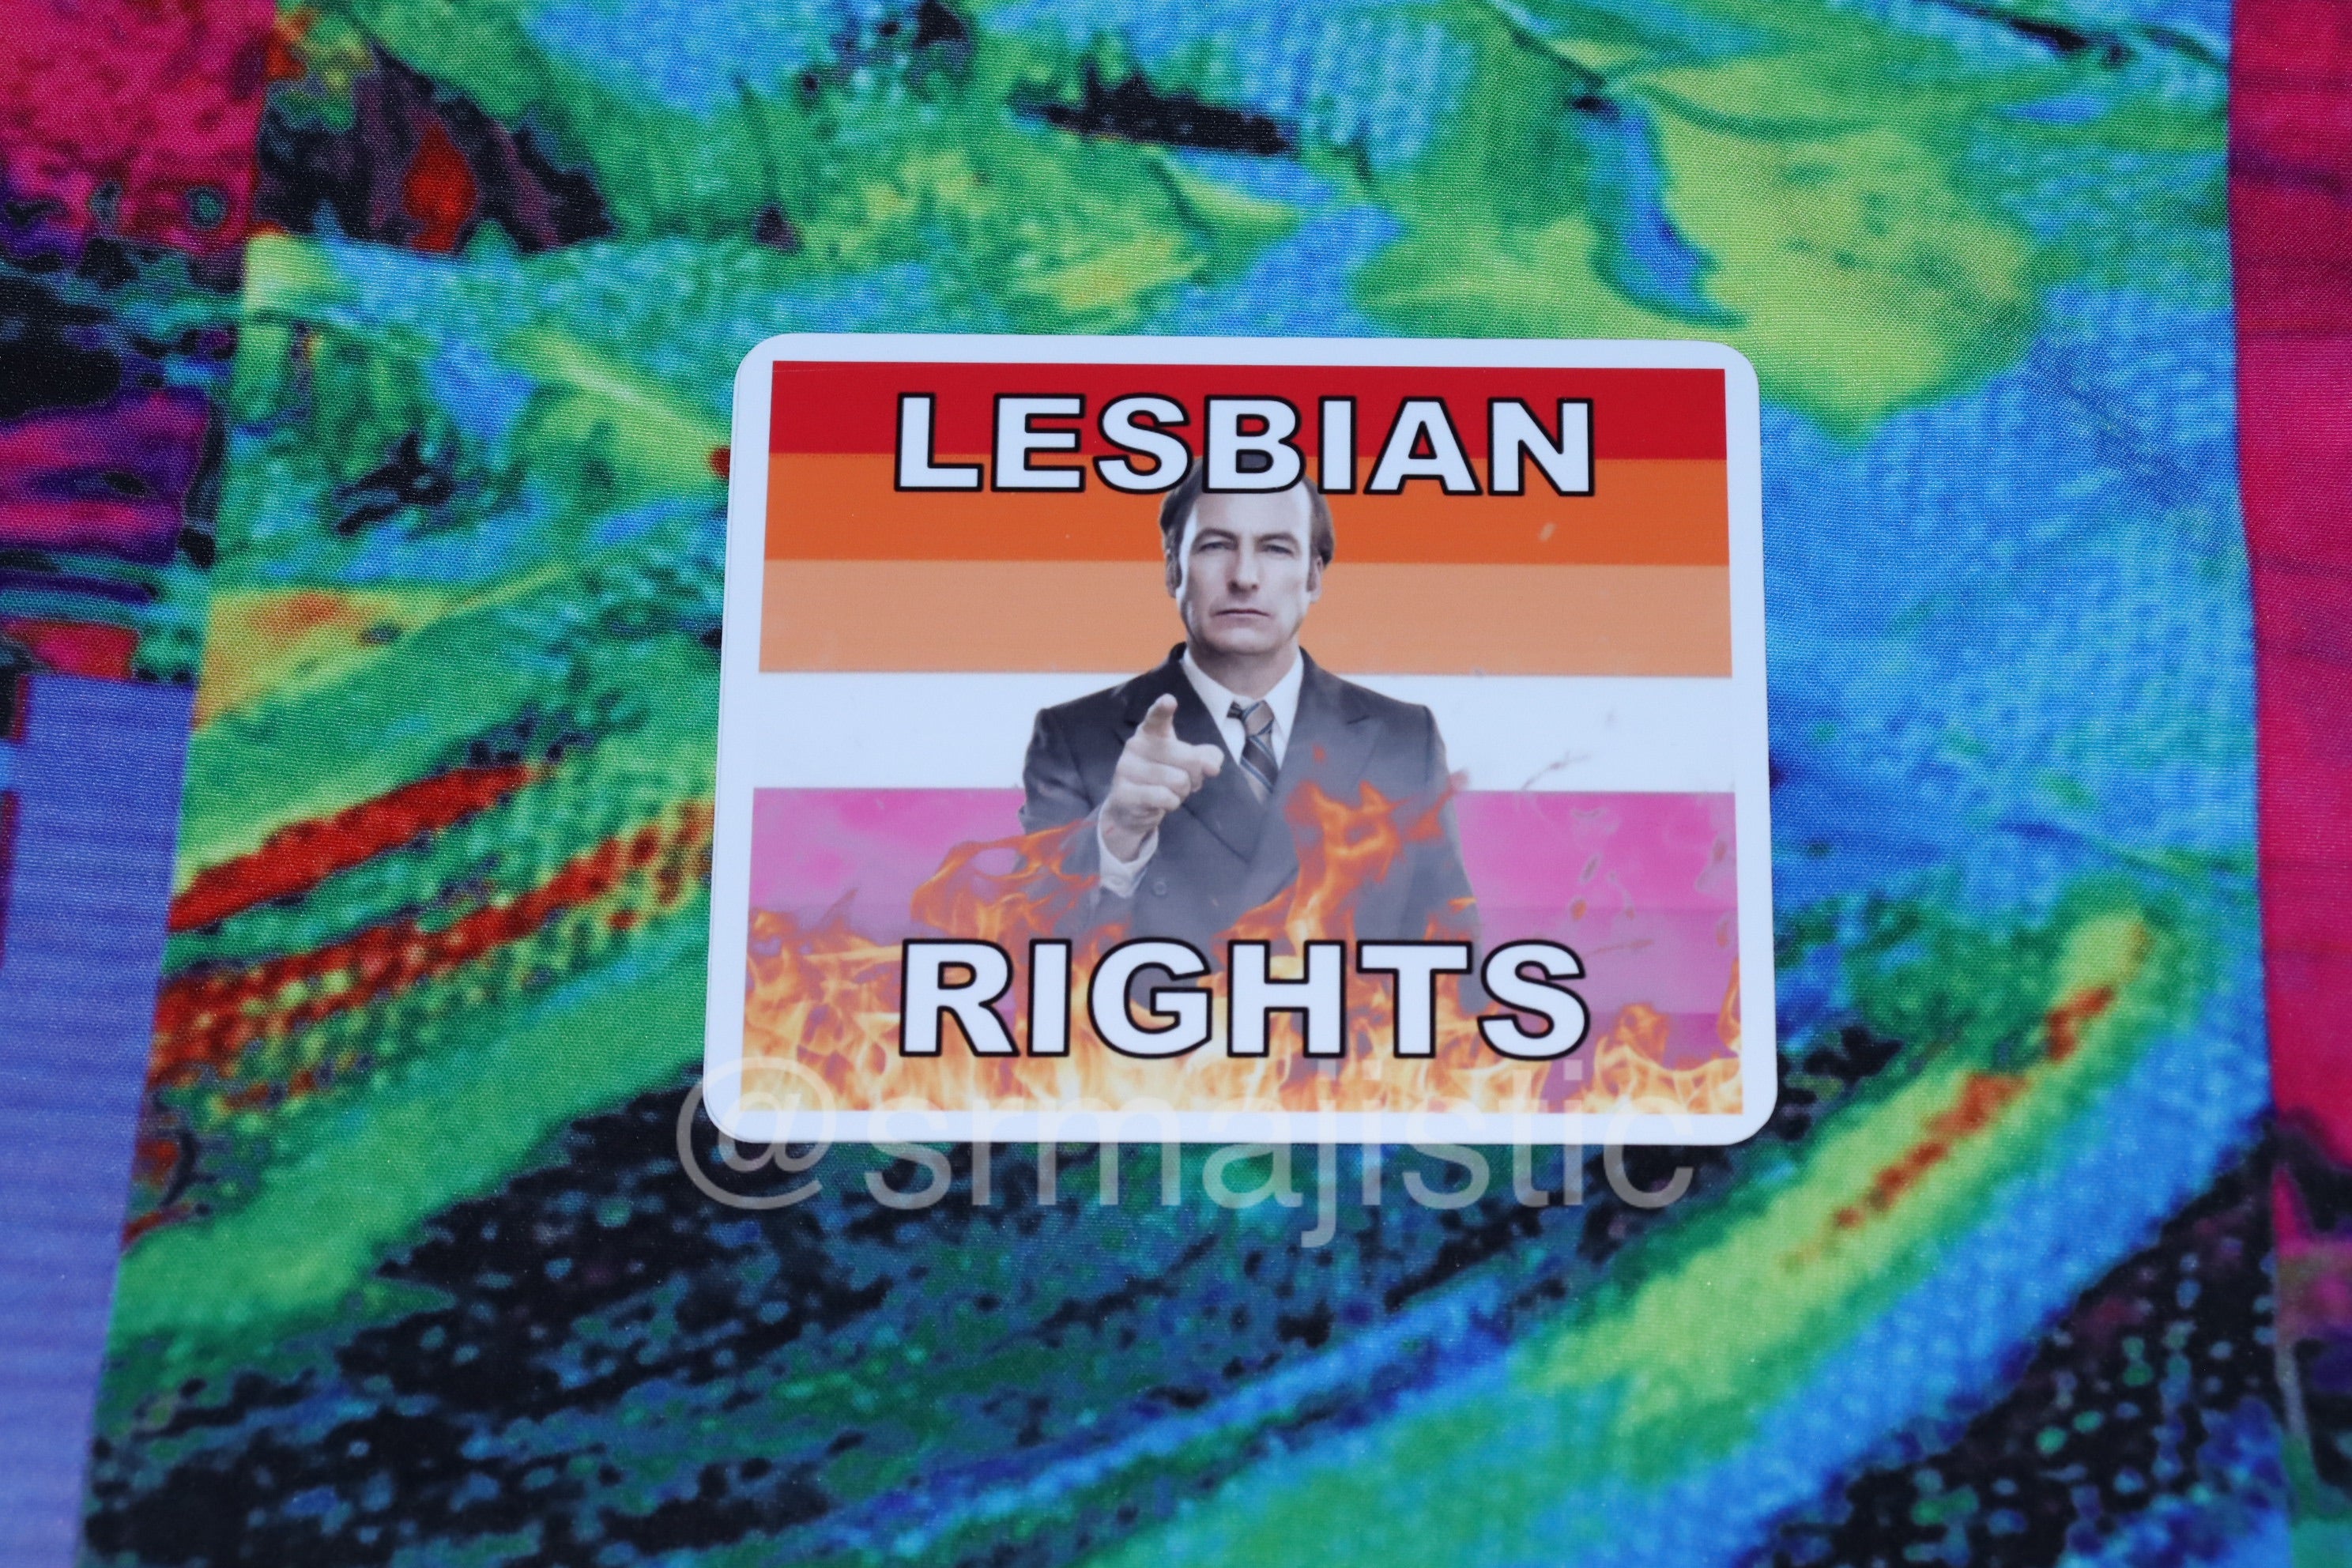 Saul Goodman Better Call Saul Flaming Pride Flag Character Stickers